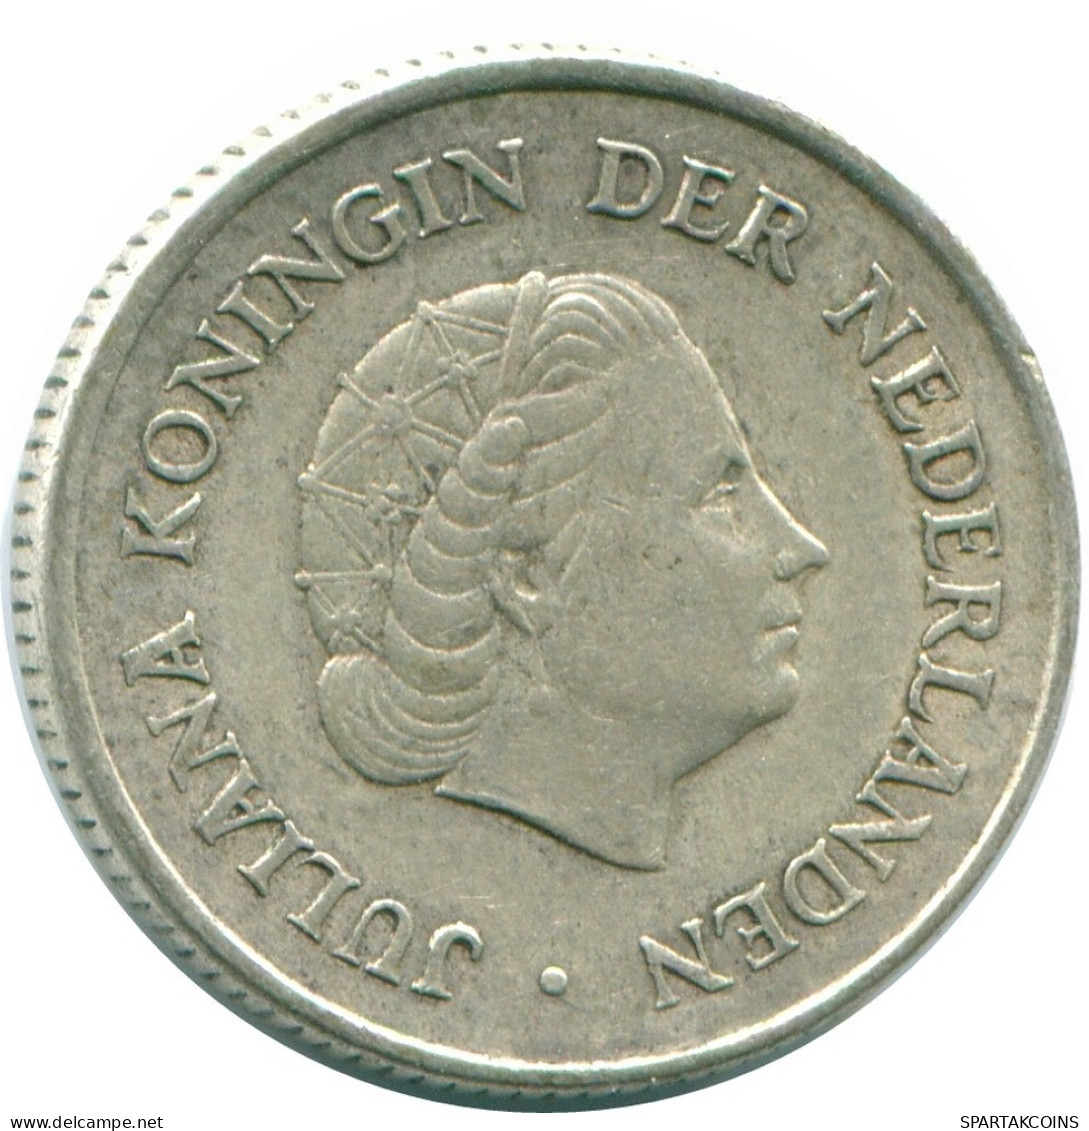 1/4 GULDEN 1967 NETHERLANDS ANTILLES SILVER Colonial Coin #NL11483.4.U.A - Netherlands Antilles